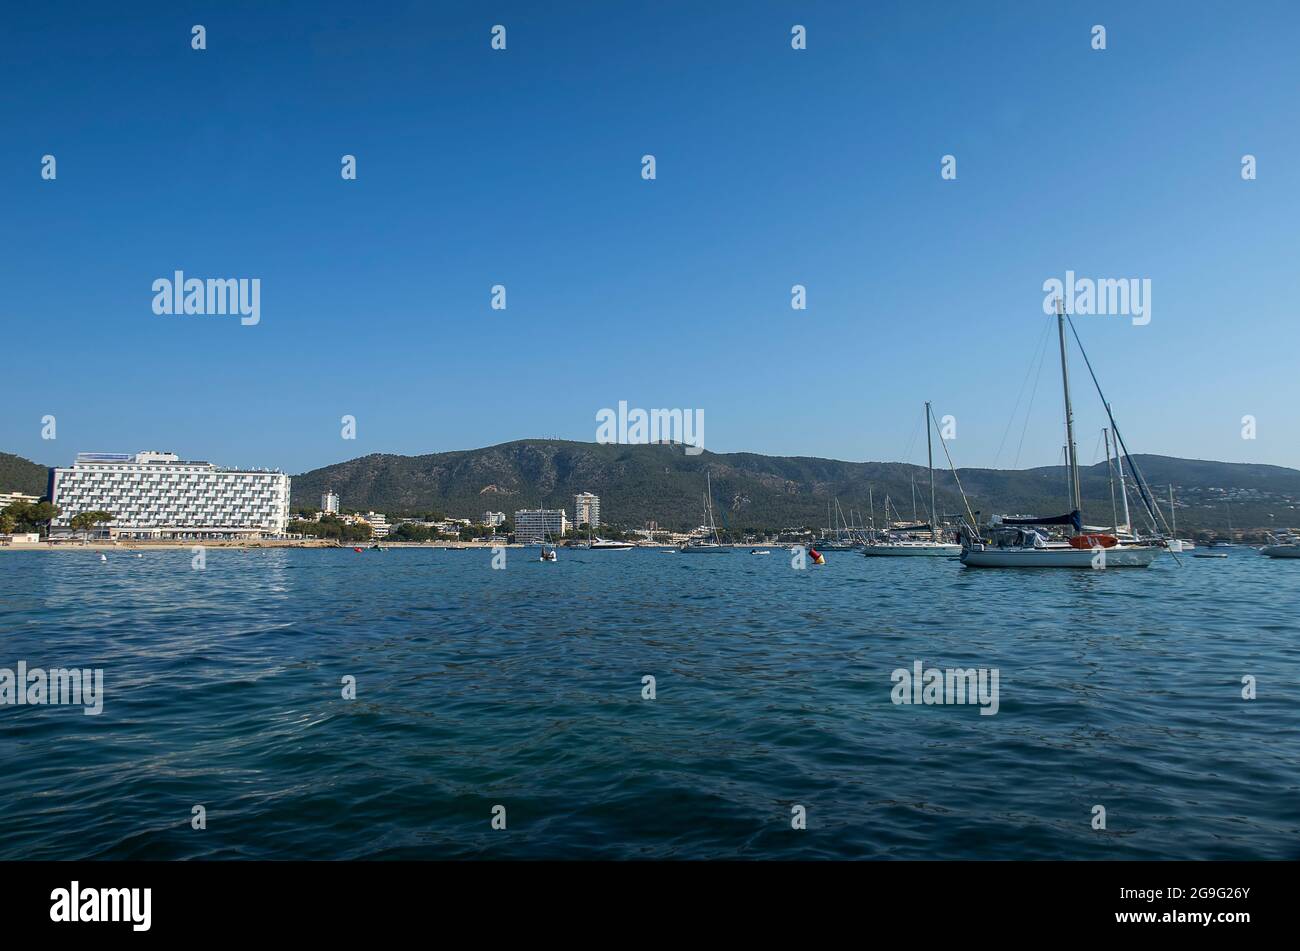 The bay at Torrenova in Mallorca, Spain Stock Photo